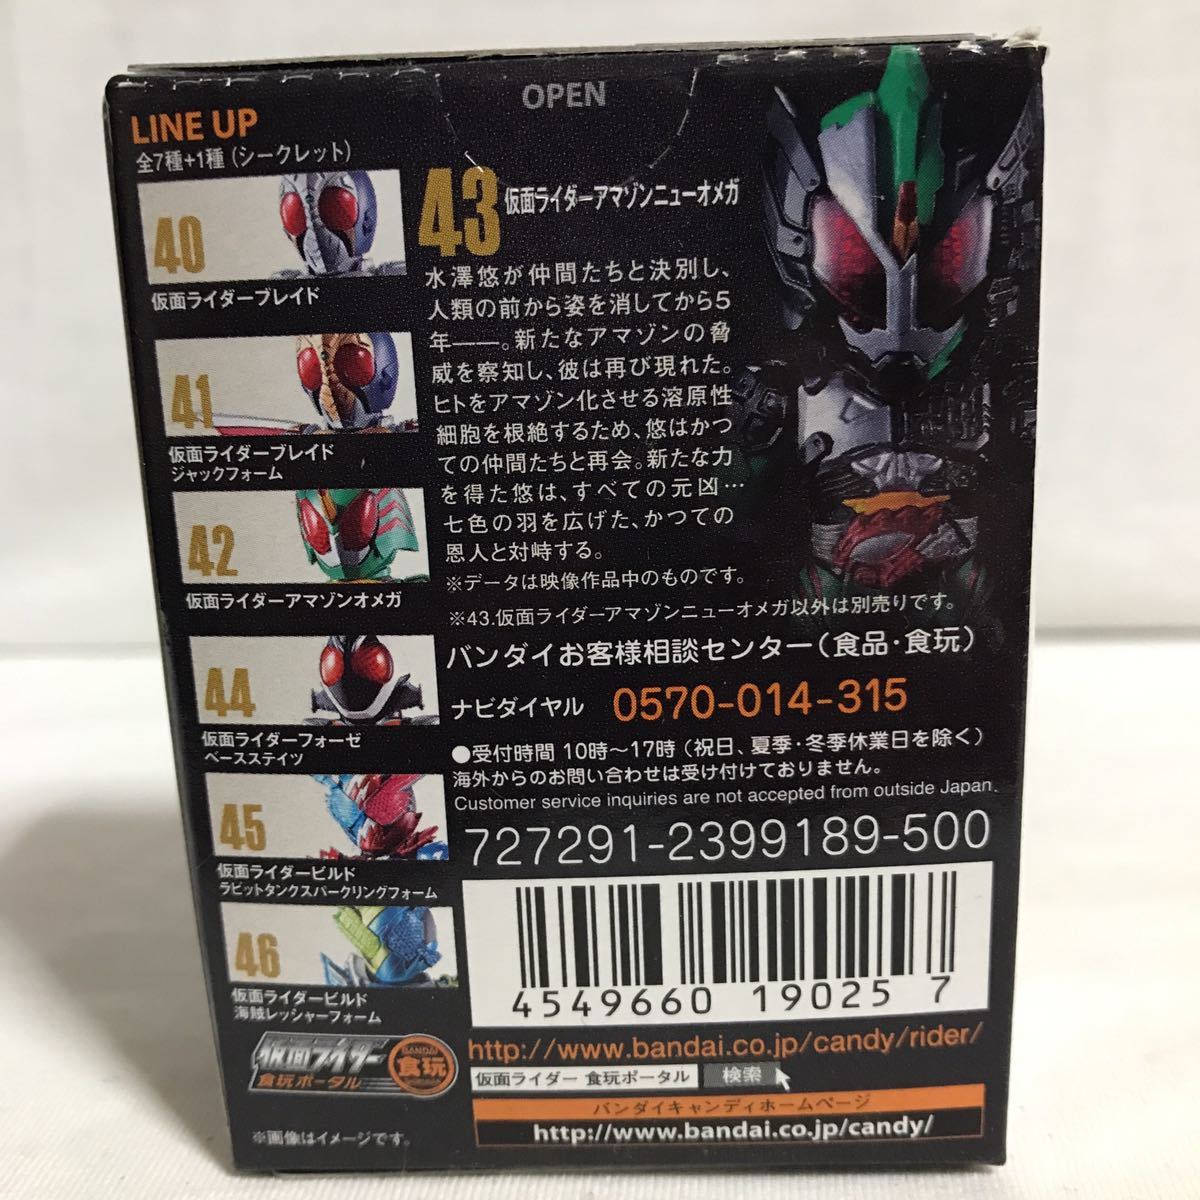  van дайкон балка ji Kamen Rider #43 Kamen Rider Amazon новый Omega нераспечатанный 39